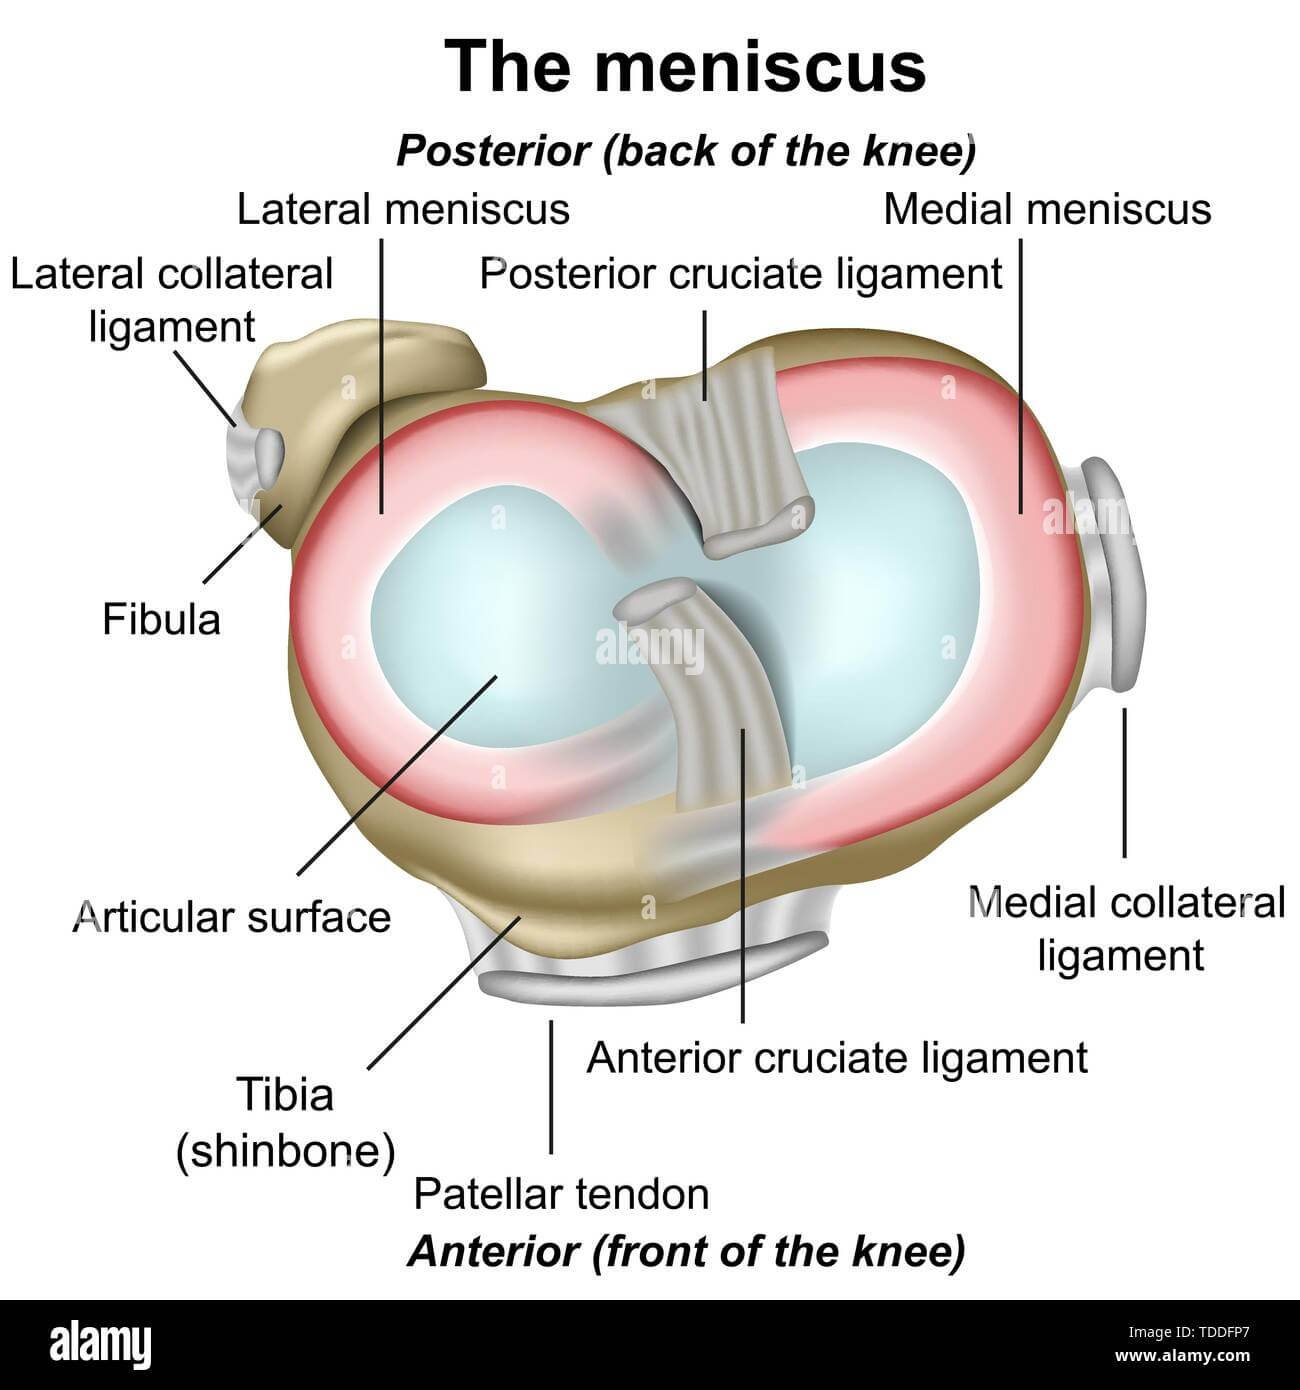 different parts of the meniscus